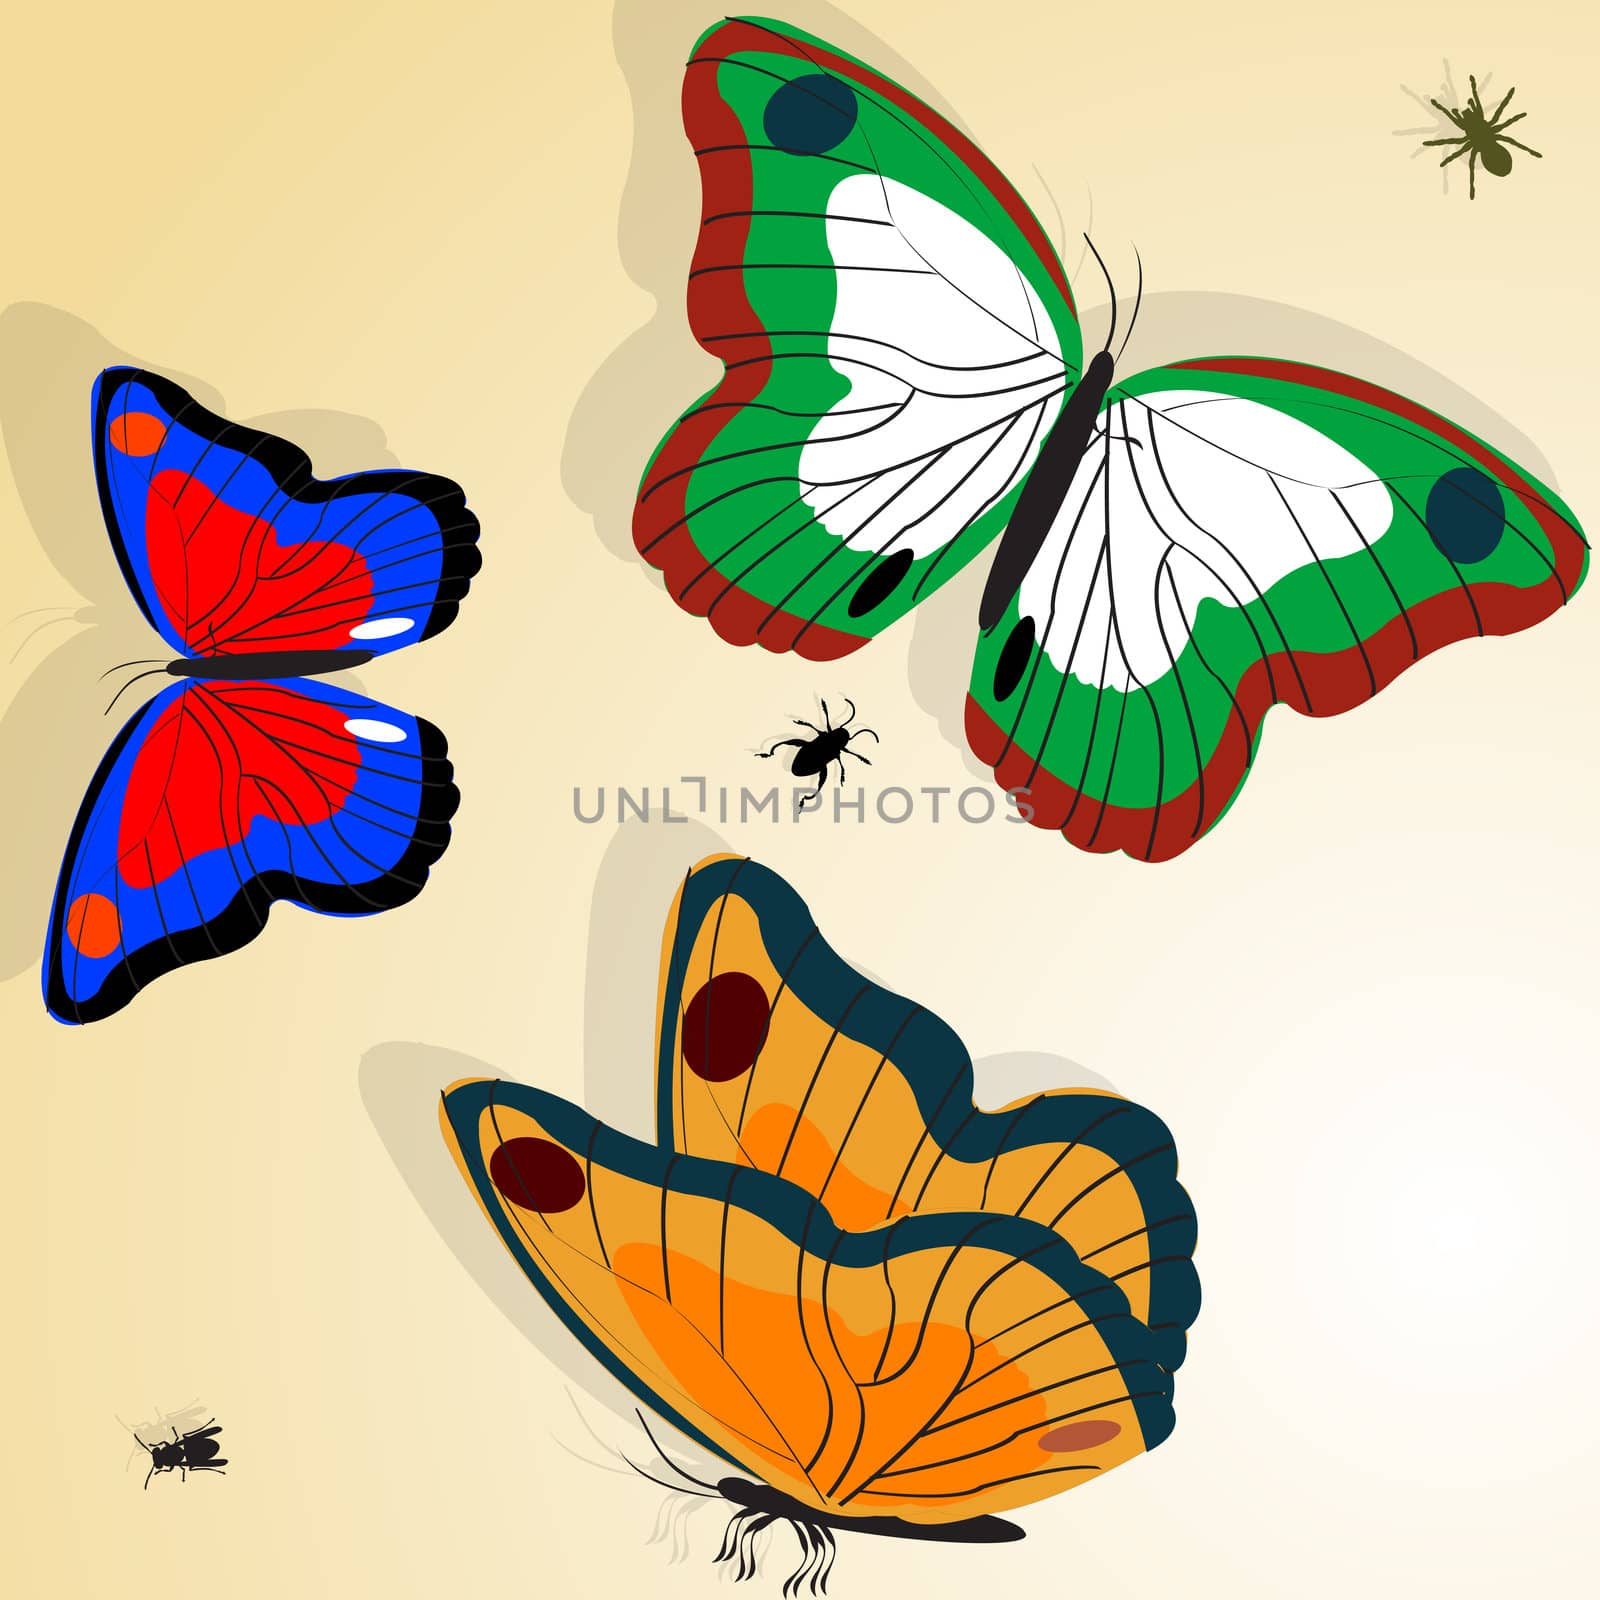 Buterflies illustration by Lirch